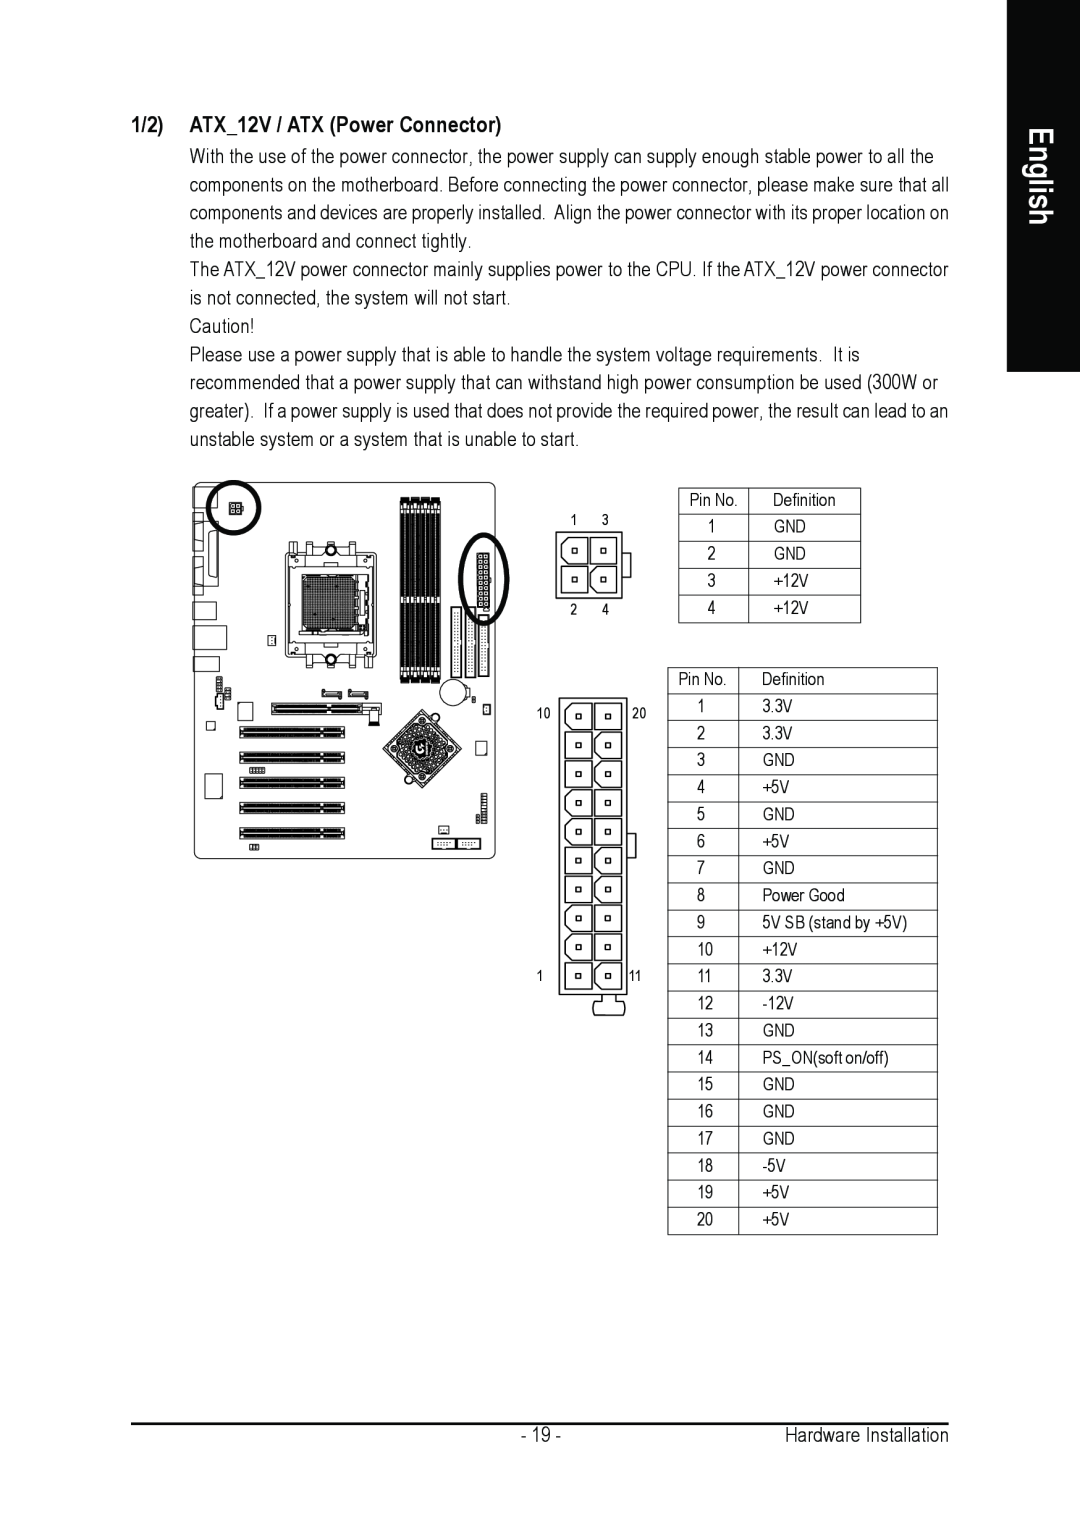 AMD GA-K8NSC-939 user manual 1/2 ATX12V / ATX Power Connector, English 